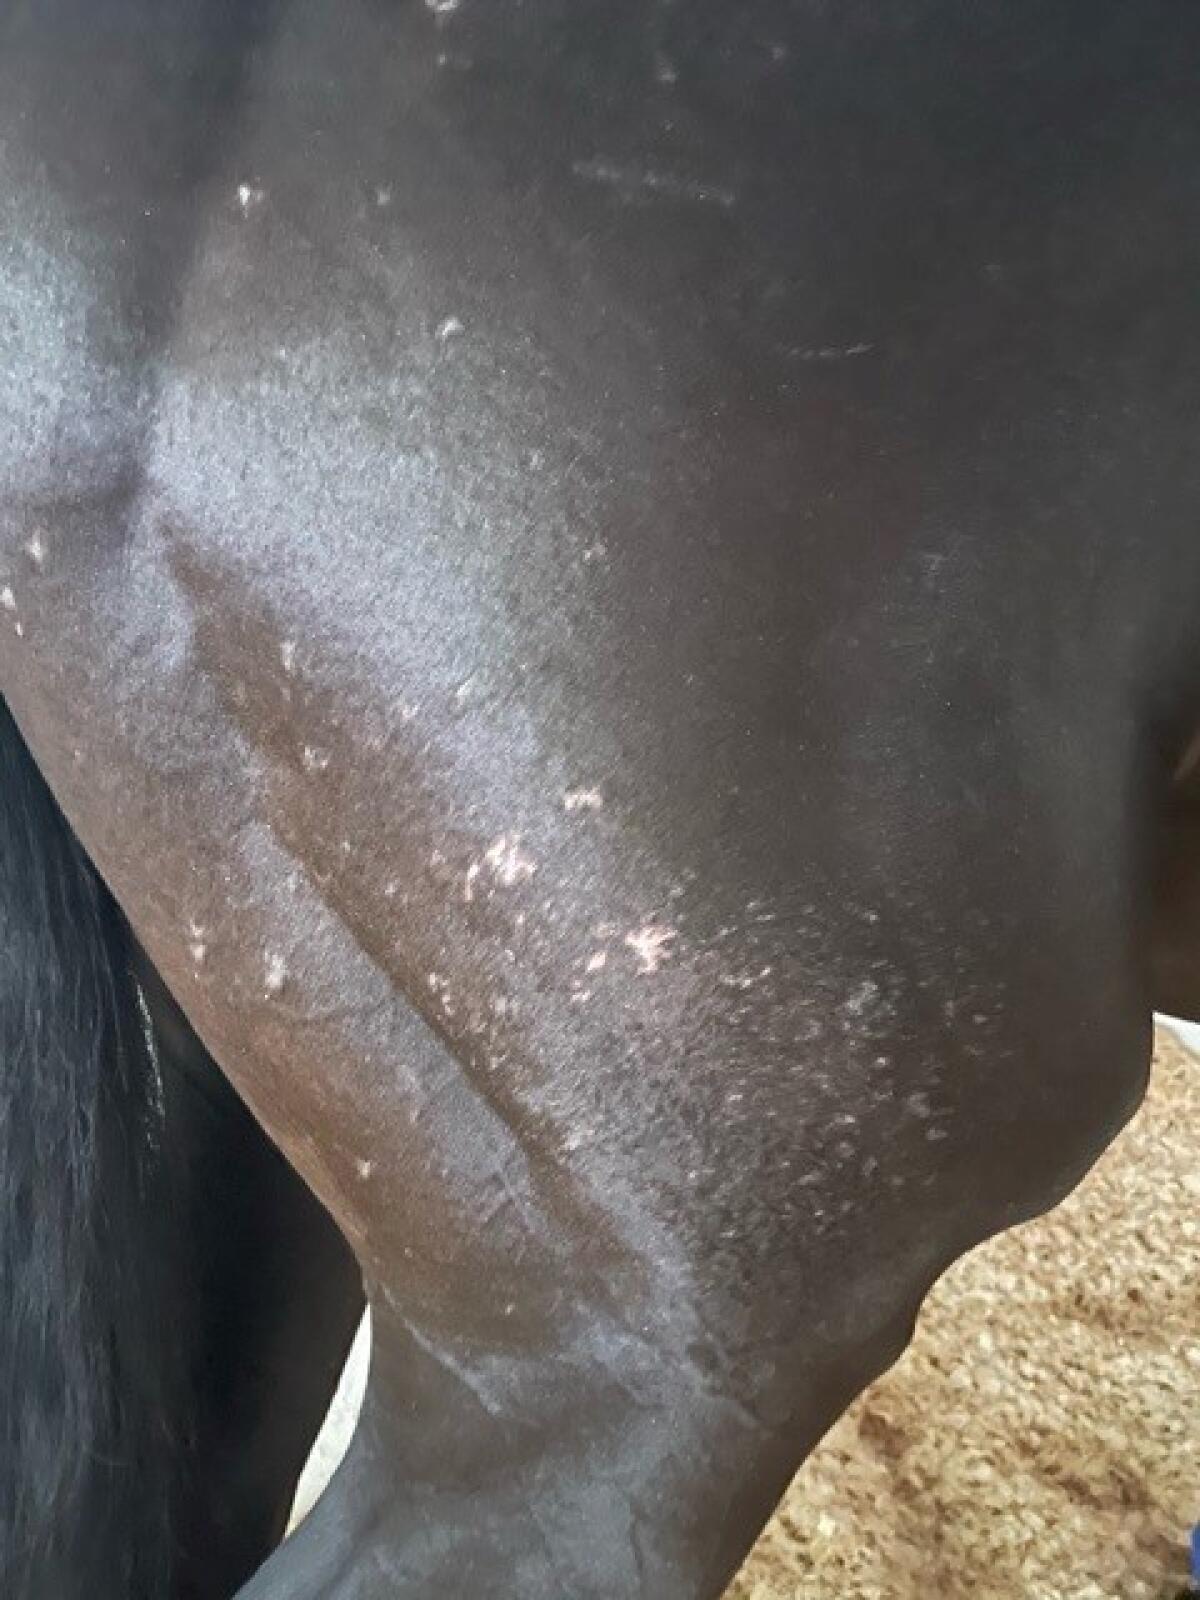 A photo released by Bob Baffert's attorney, Craig Robertson, shows a rash on the back side of Medina Spirit.